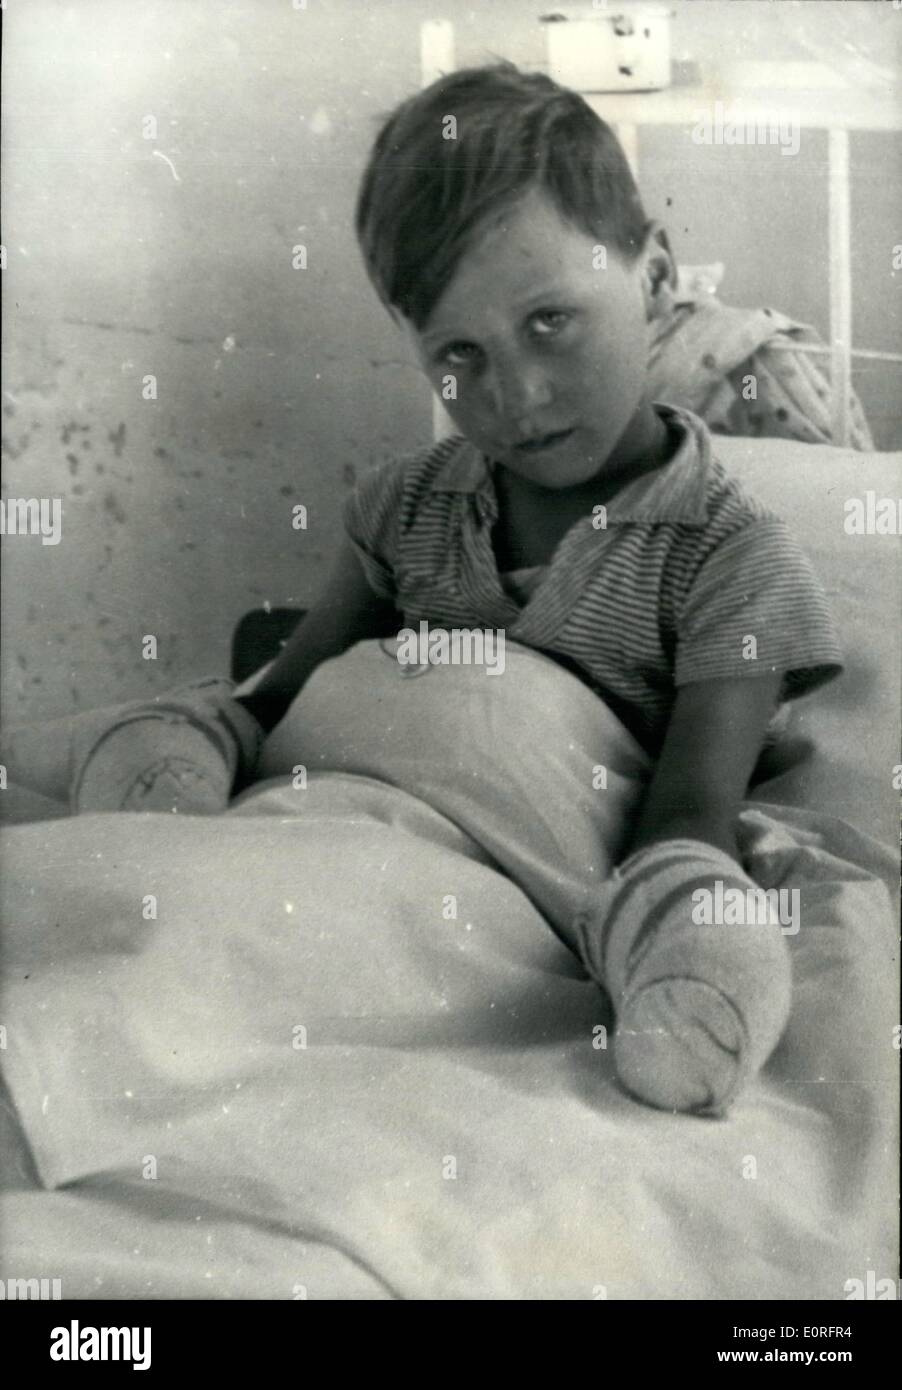 May 05 1959 6 Year Old Bernard Delhaye Gets Burnt In Trying To Save His Sister 6 Year Old Bernard Delhaye Get Seriously Burnt As He Was Trying To Save His